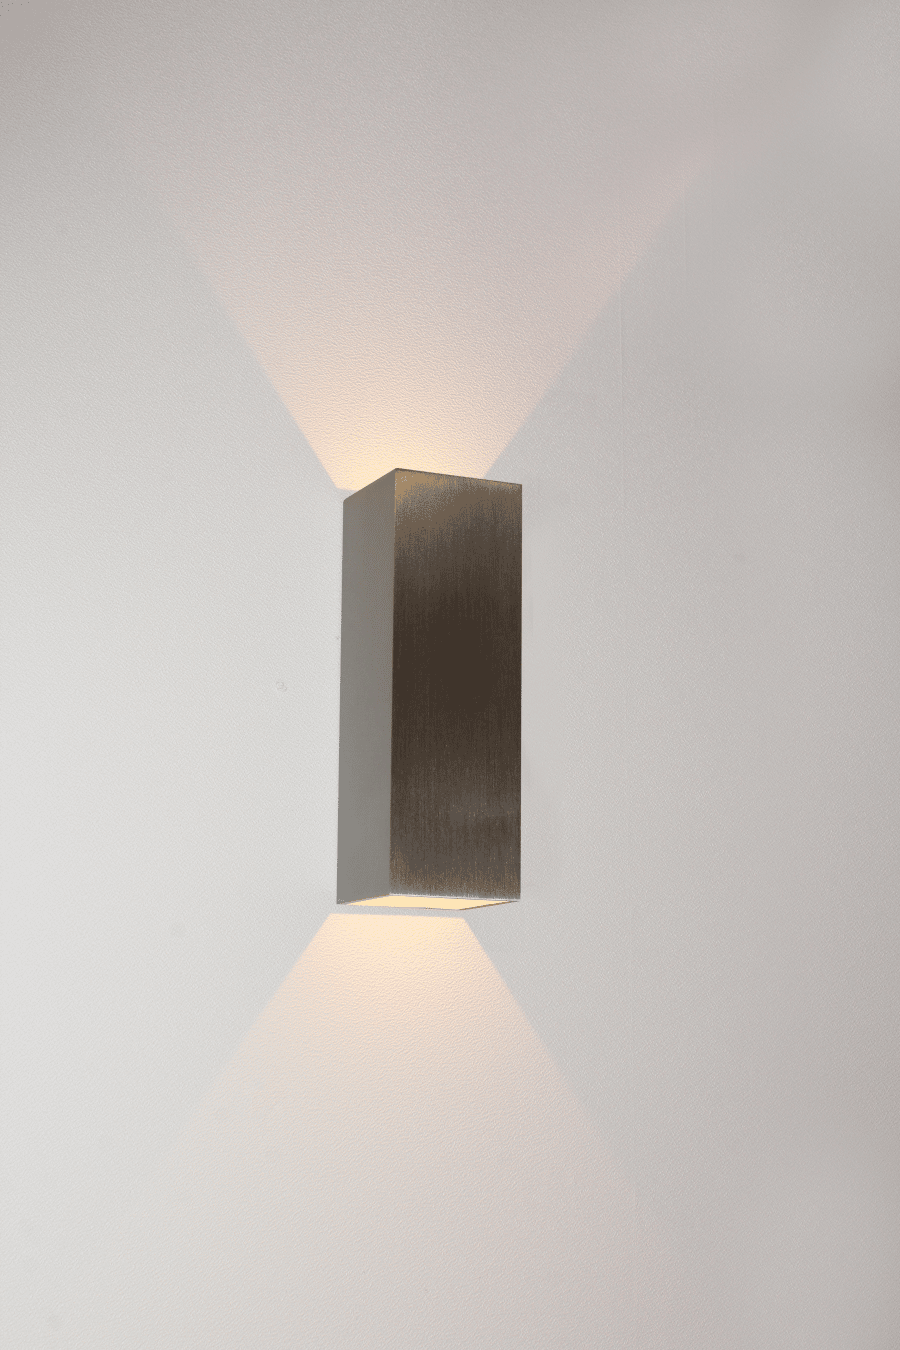 Buitenlamp Vegas klein 150 aluminium wandlamp up-down artdelight tuinextra